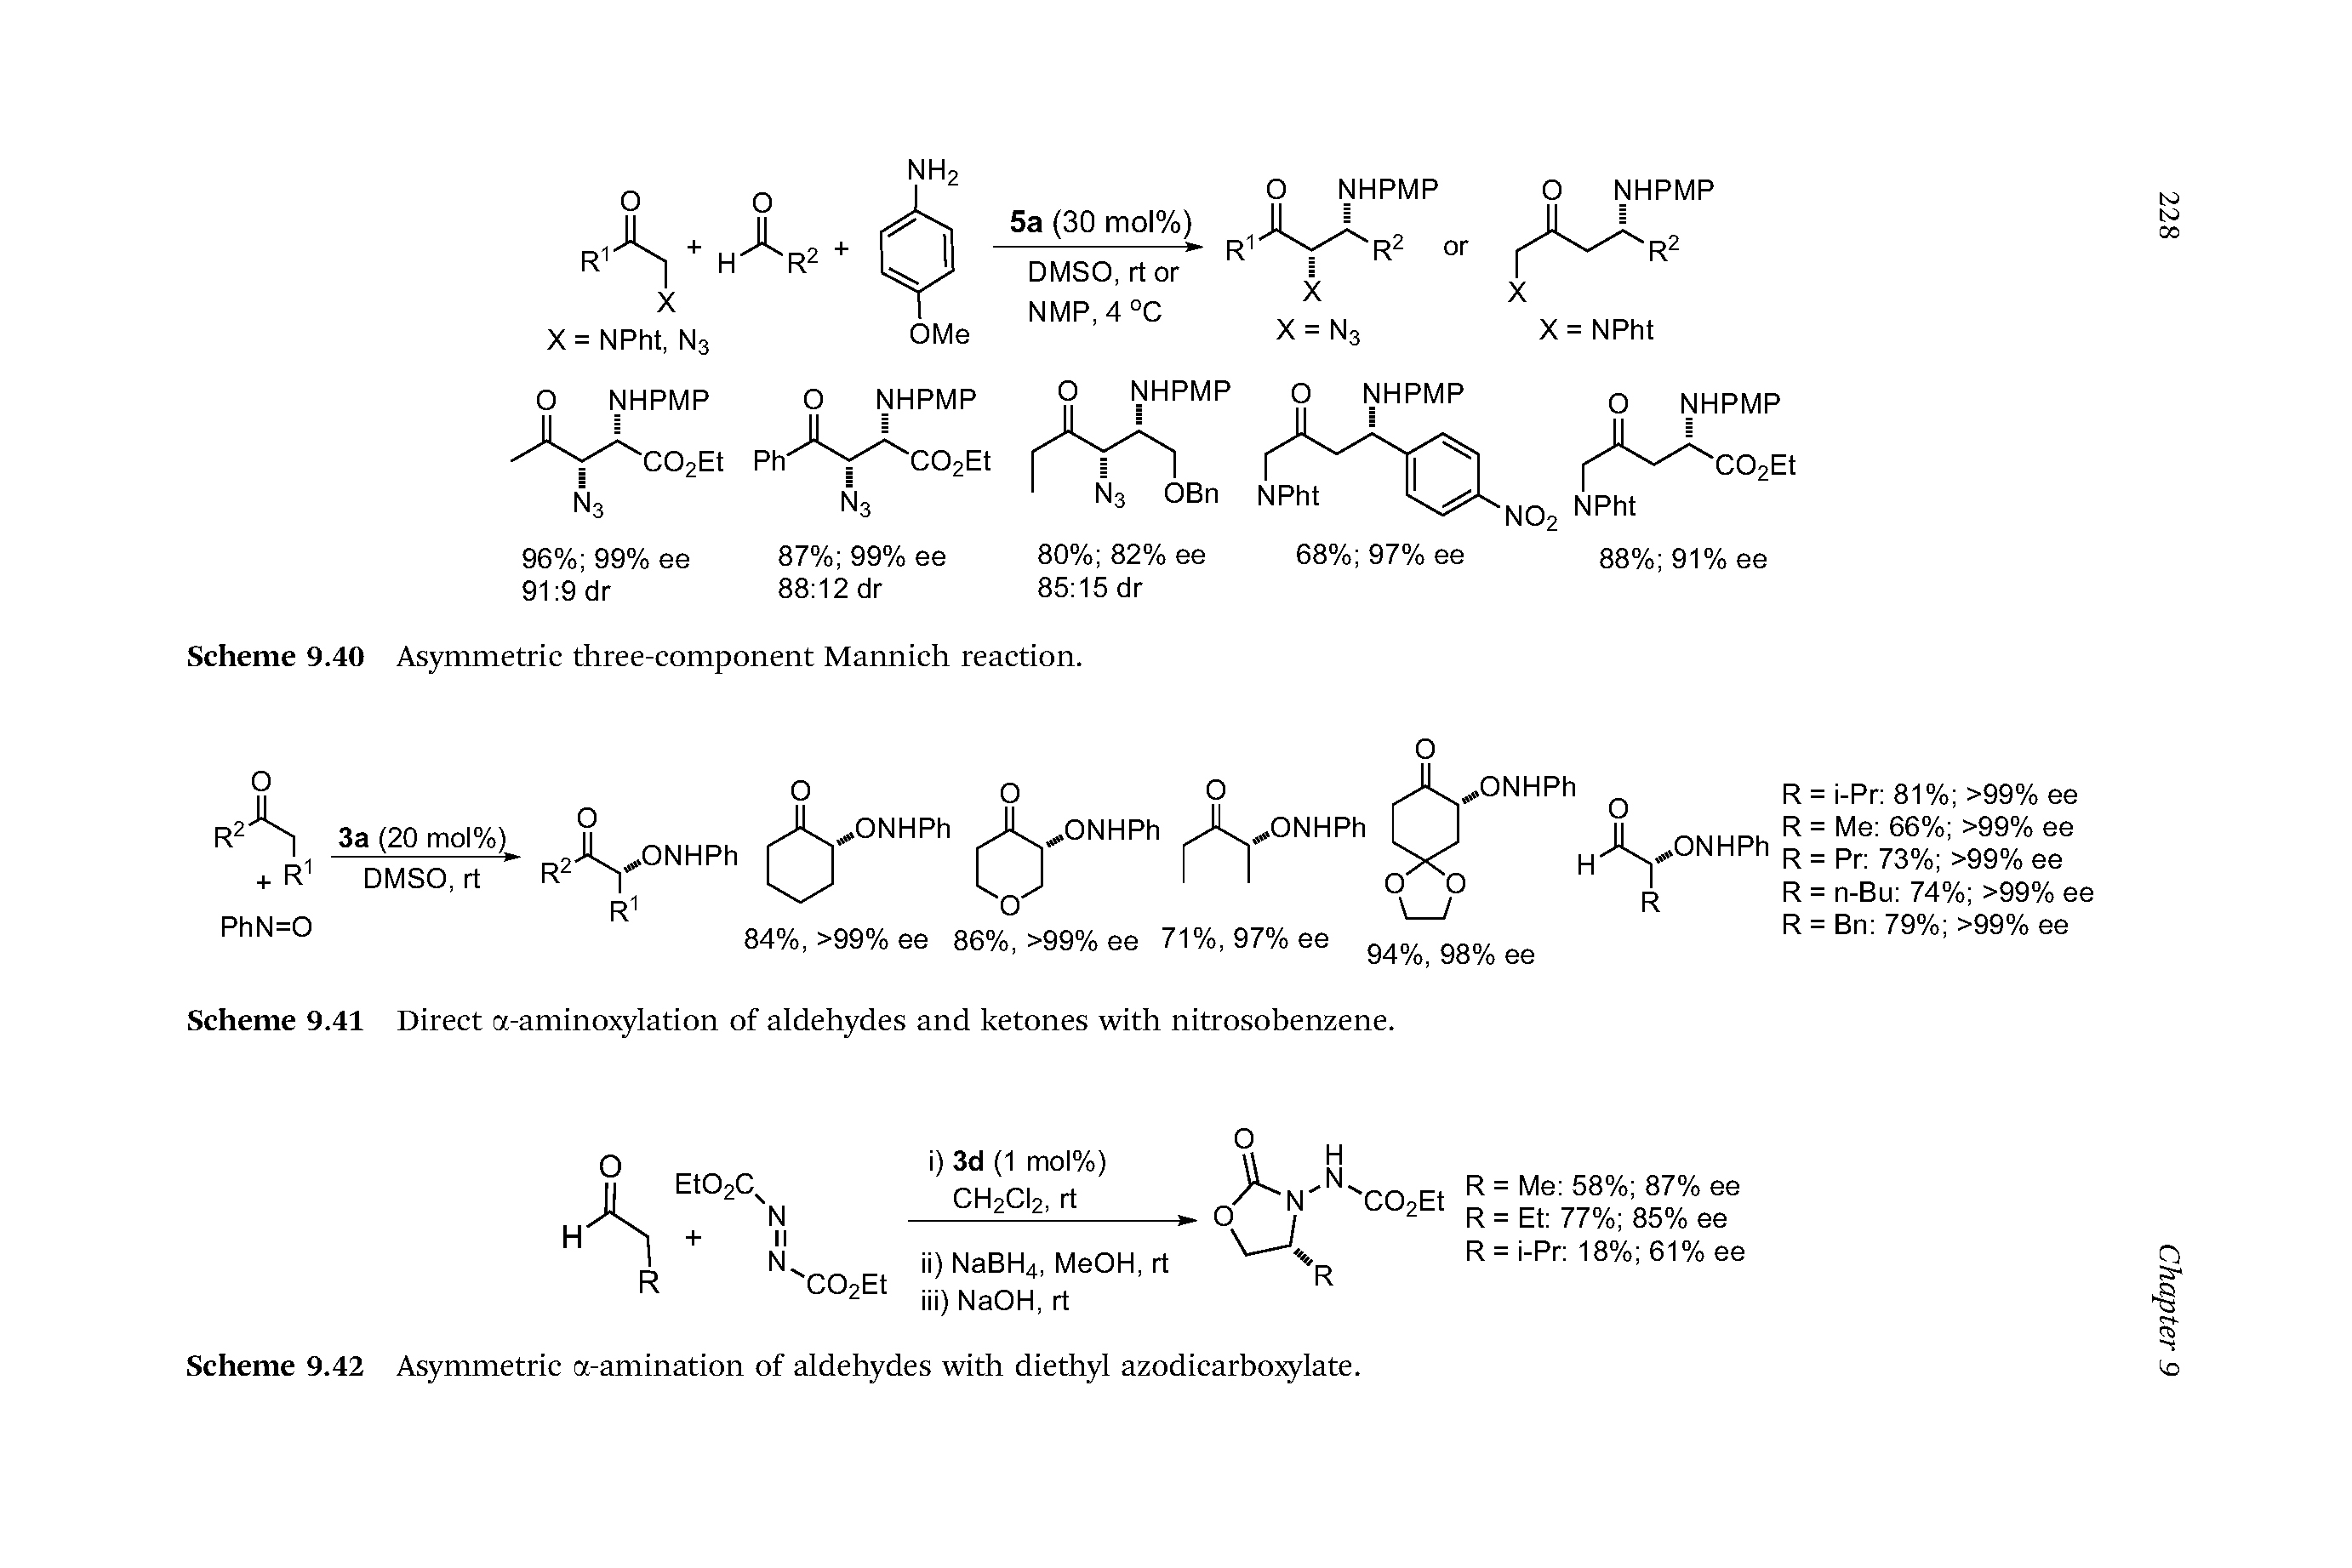 Scheme 9.41 Direct a-aminoxylation of aldehydes and ketones with nitrosobenzene.